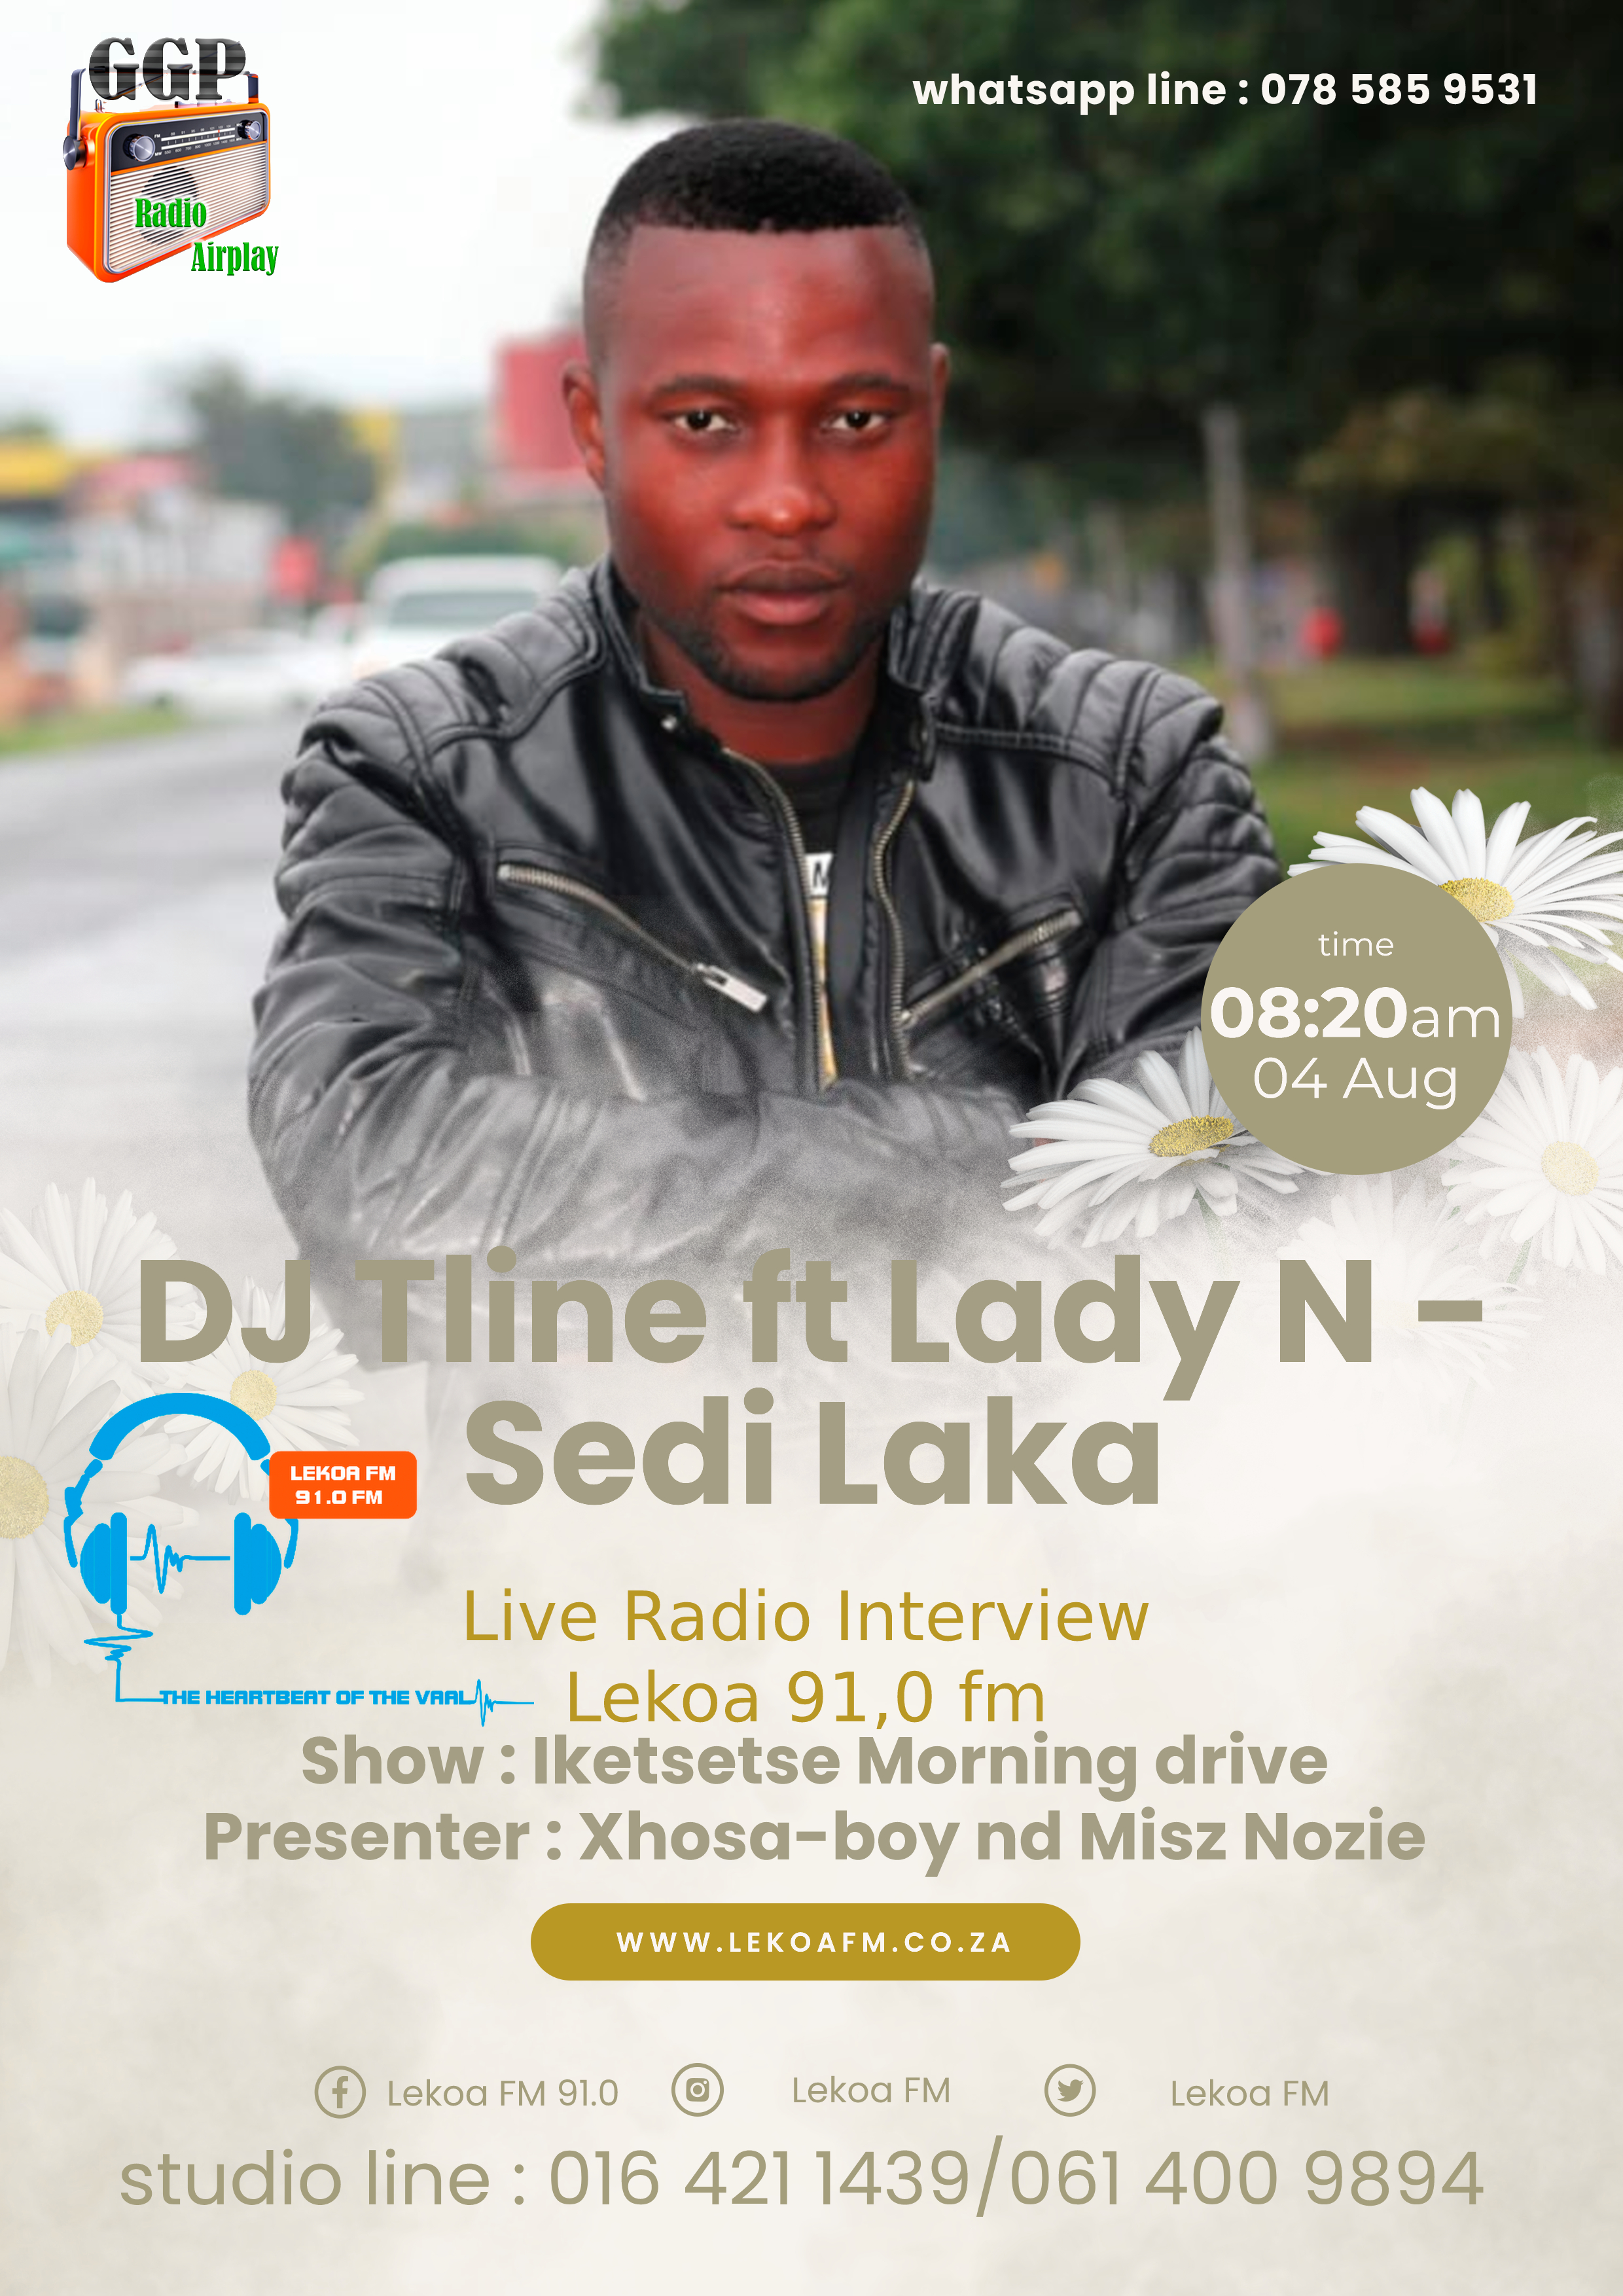 Please Tune in to DJ Tline's Radio interview at Lekoa 91.0 fm next week Thursday